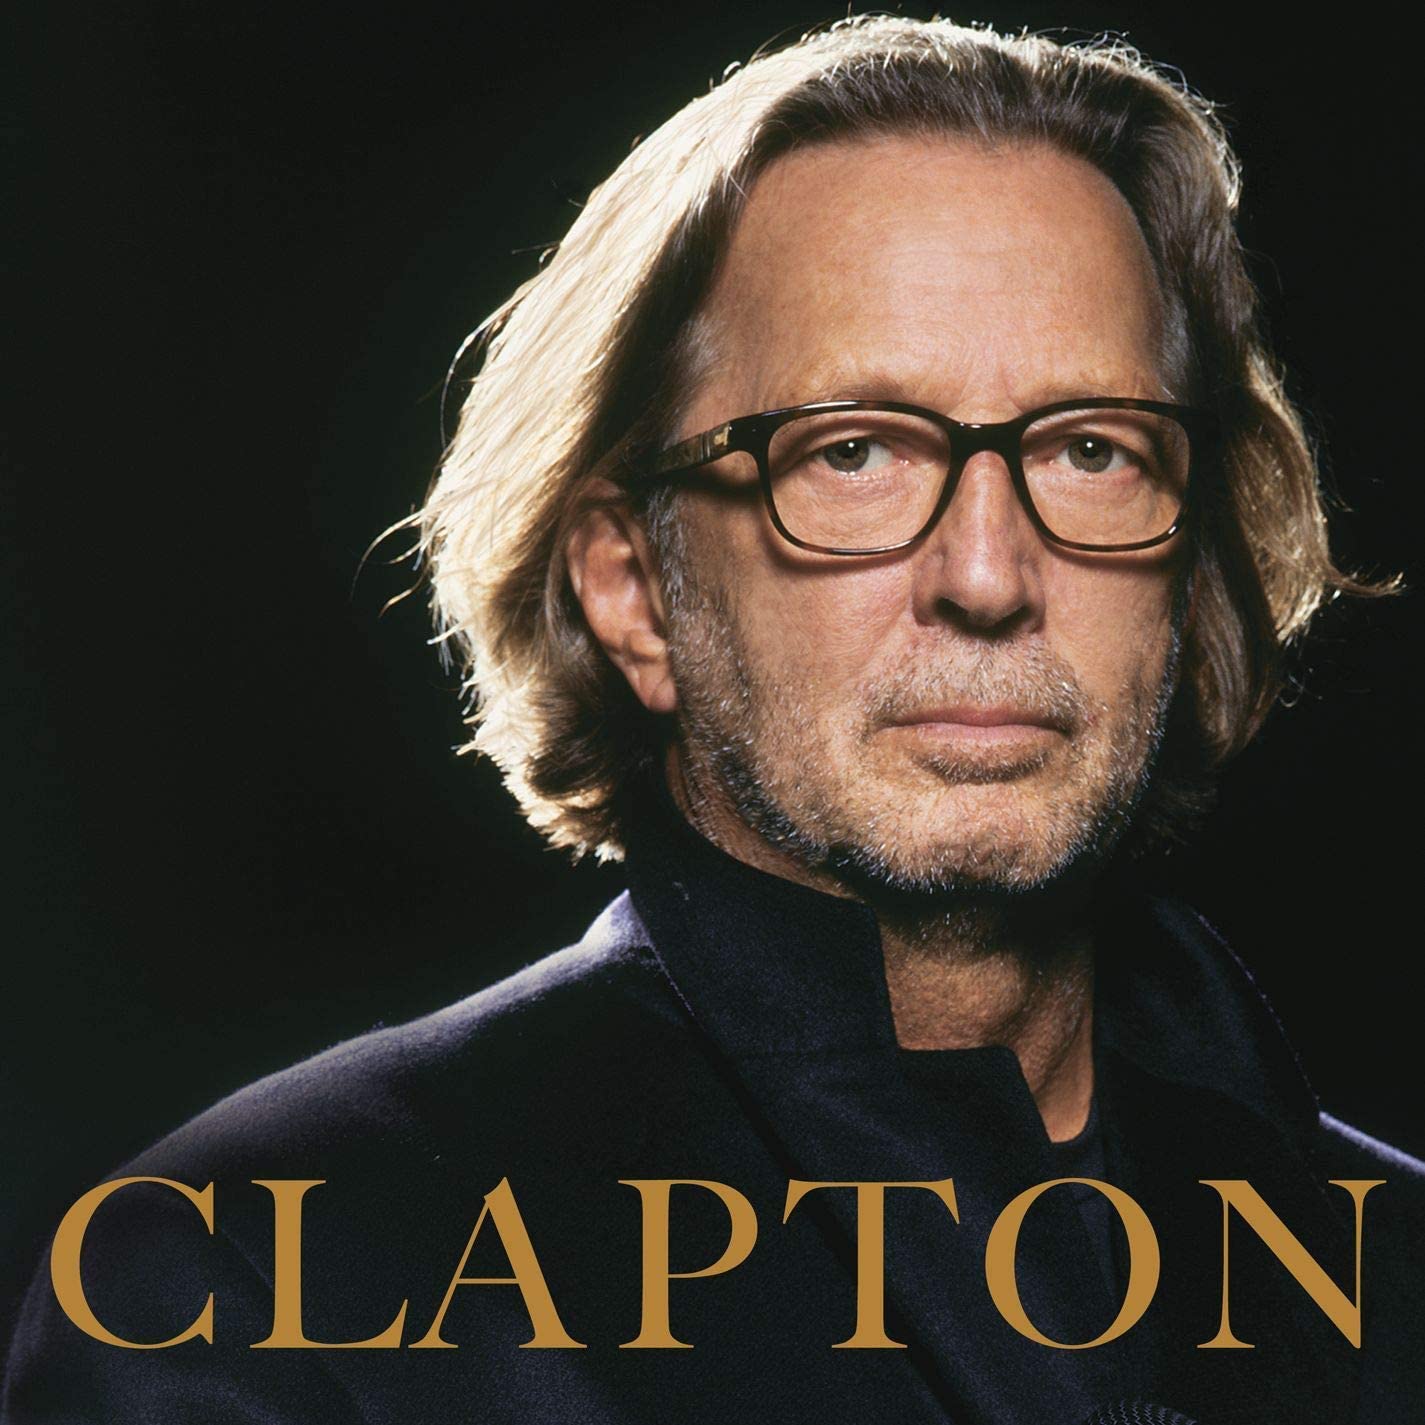 Eric Clapton – Clapton - USED CD